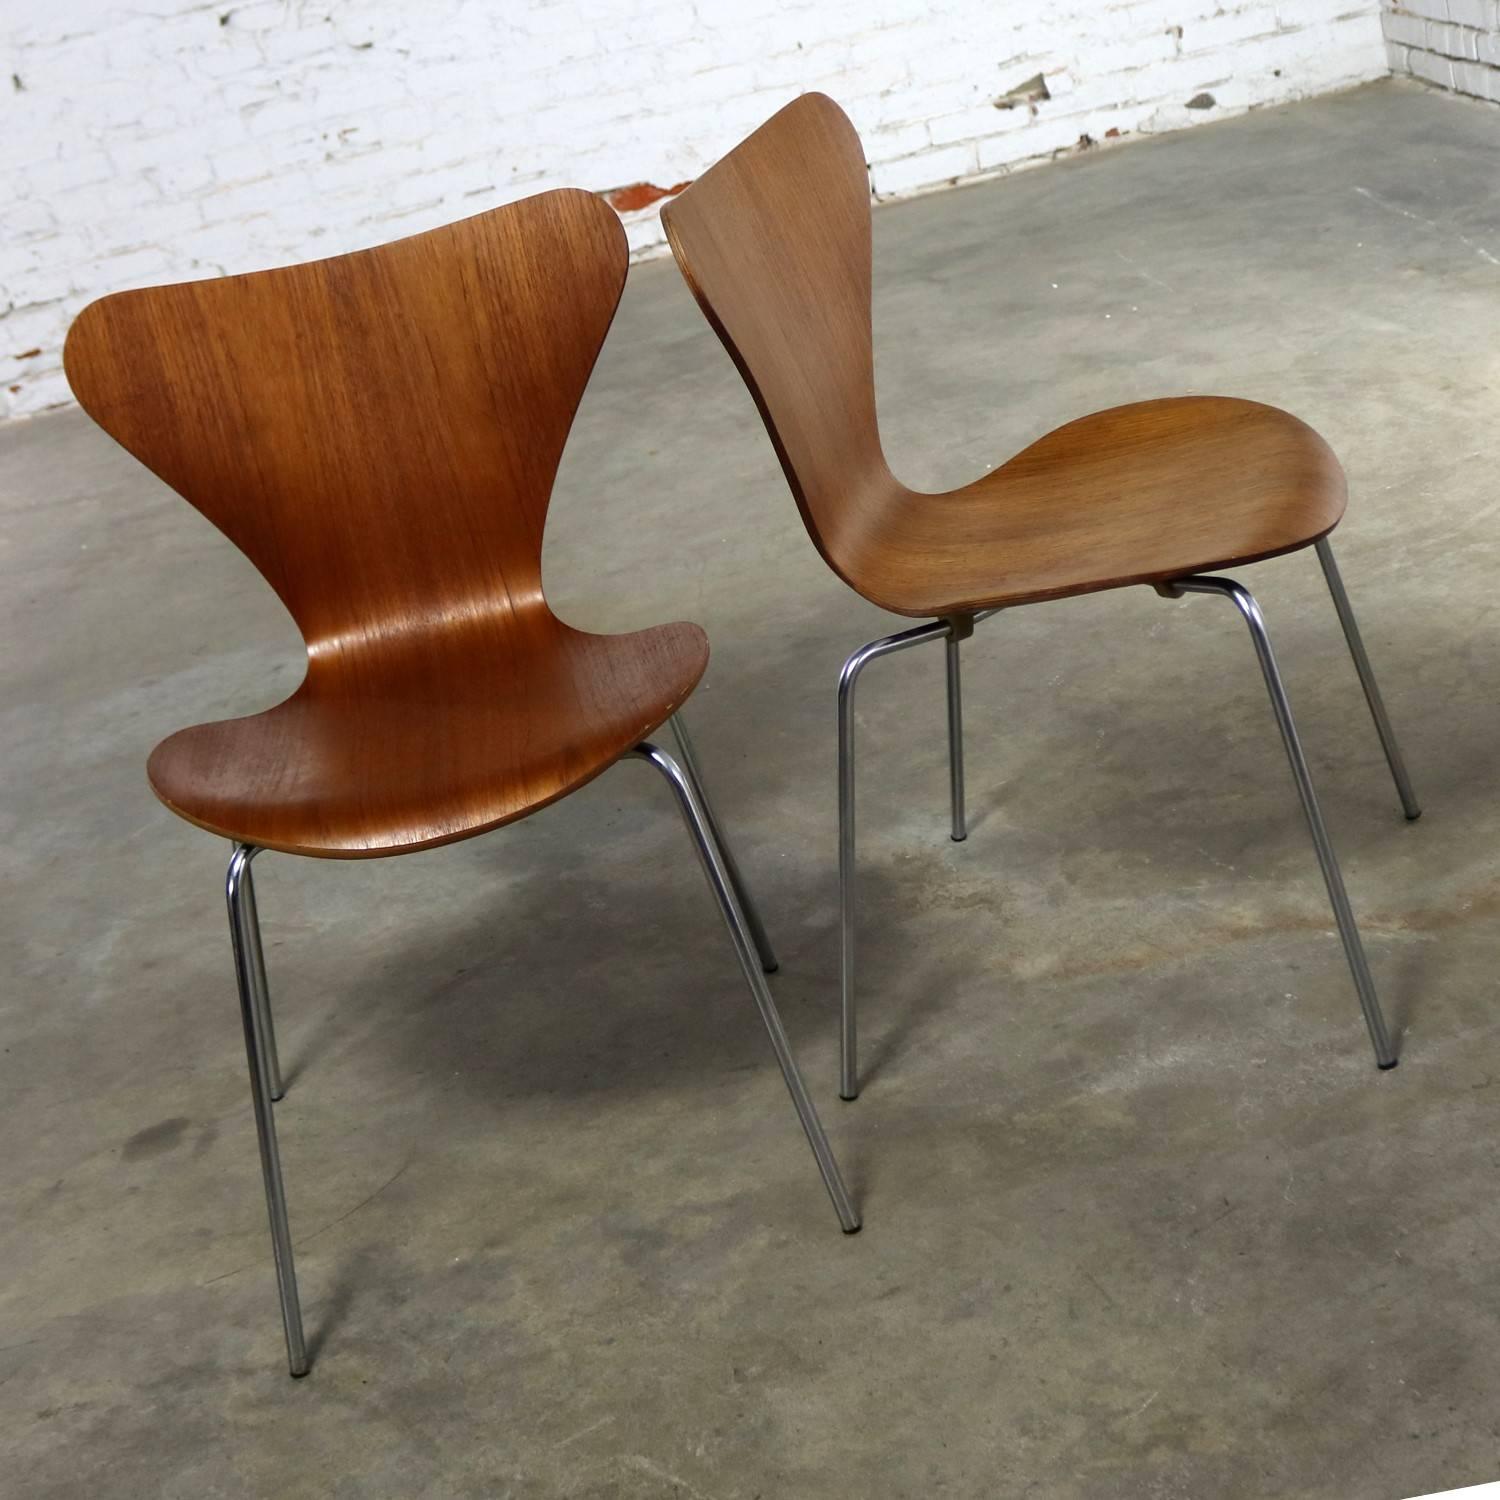 Scandinavian Modern Series 7 Chairs by Arne Jacobsen for Fritz Hansen Vintage MCM Molded Teak, Pair